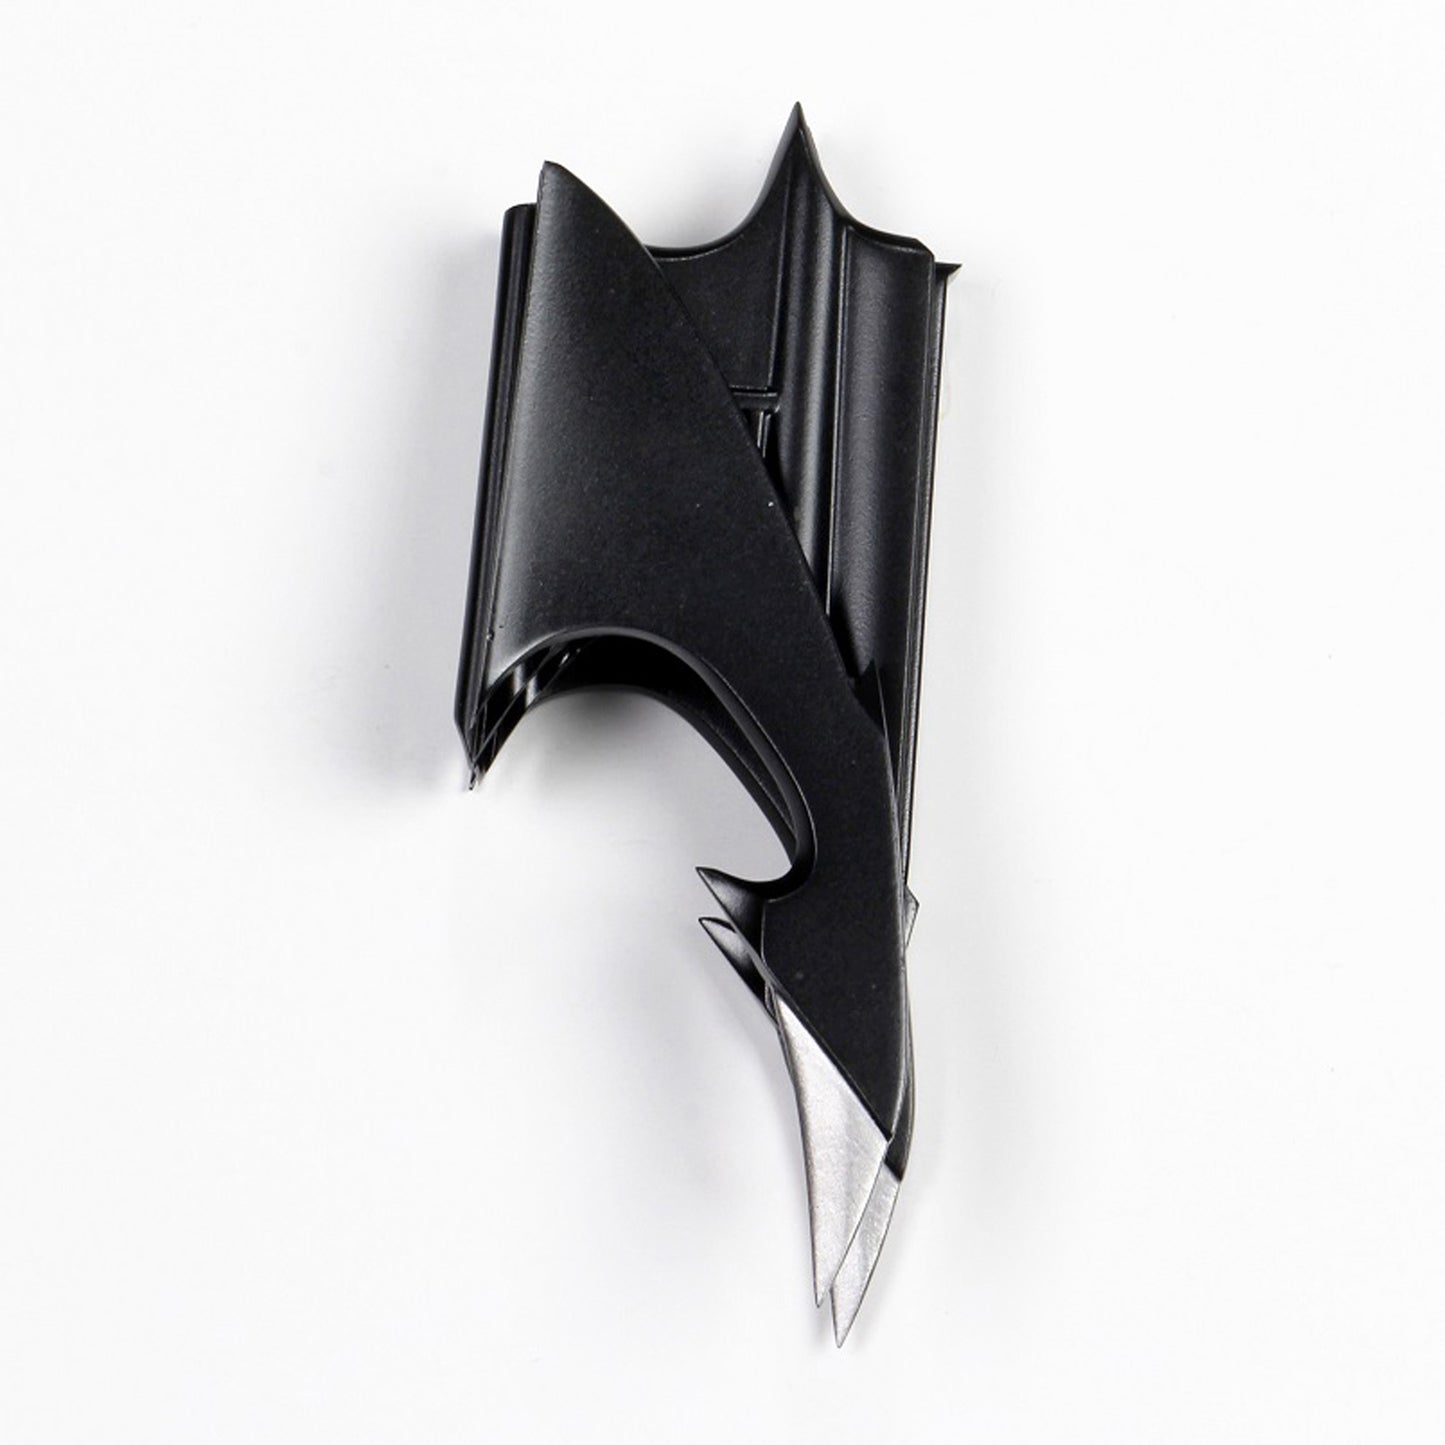 Batarang 1989 Full-Scale Replica by NECA